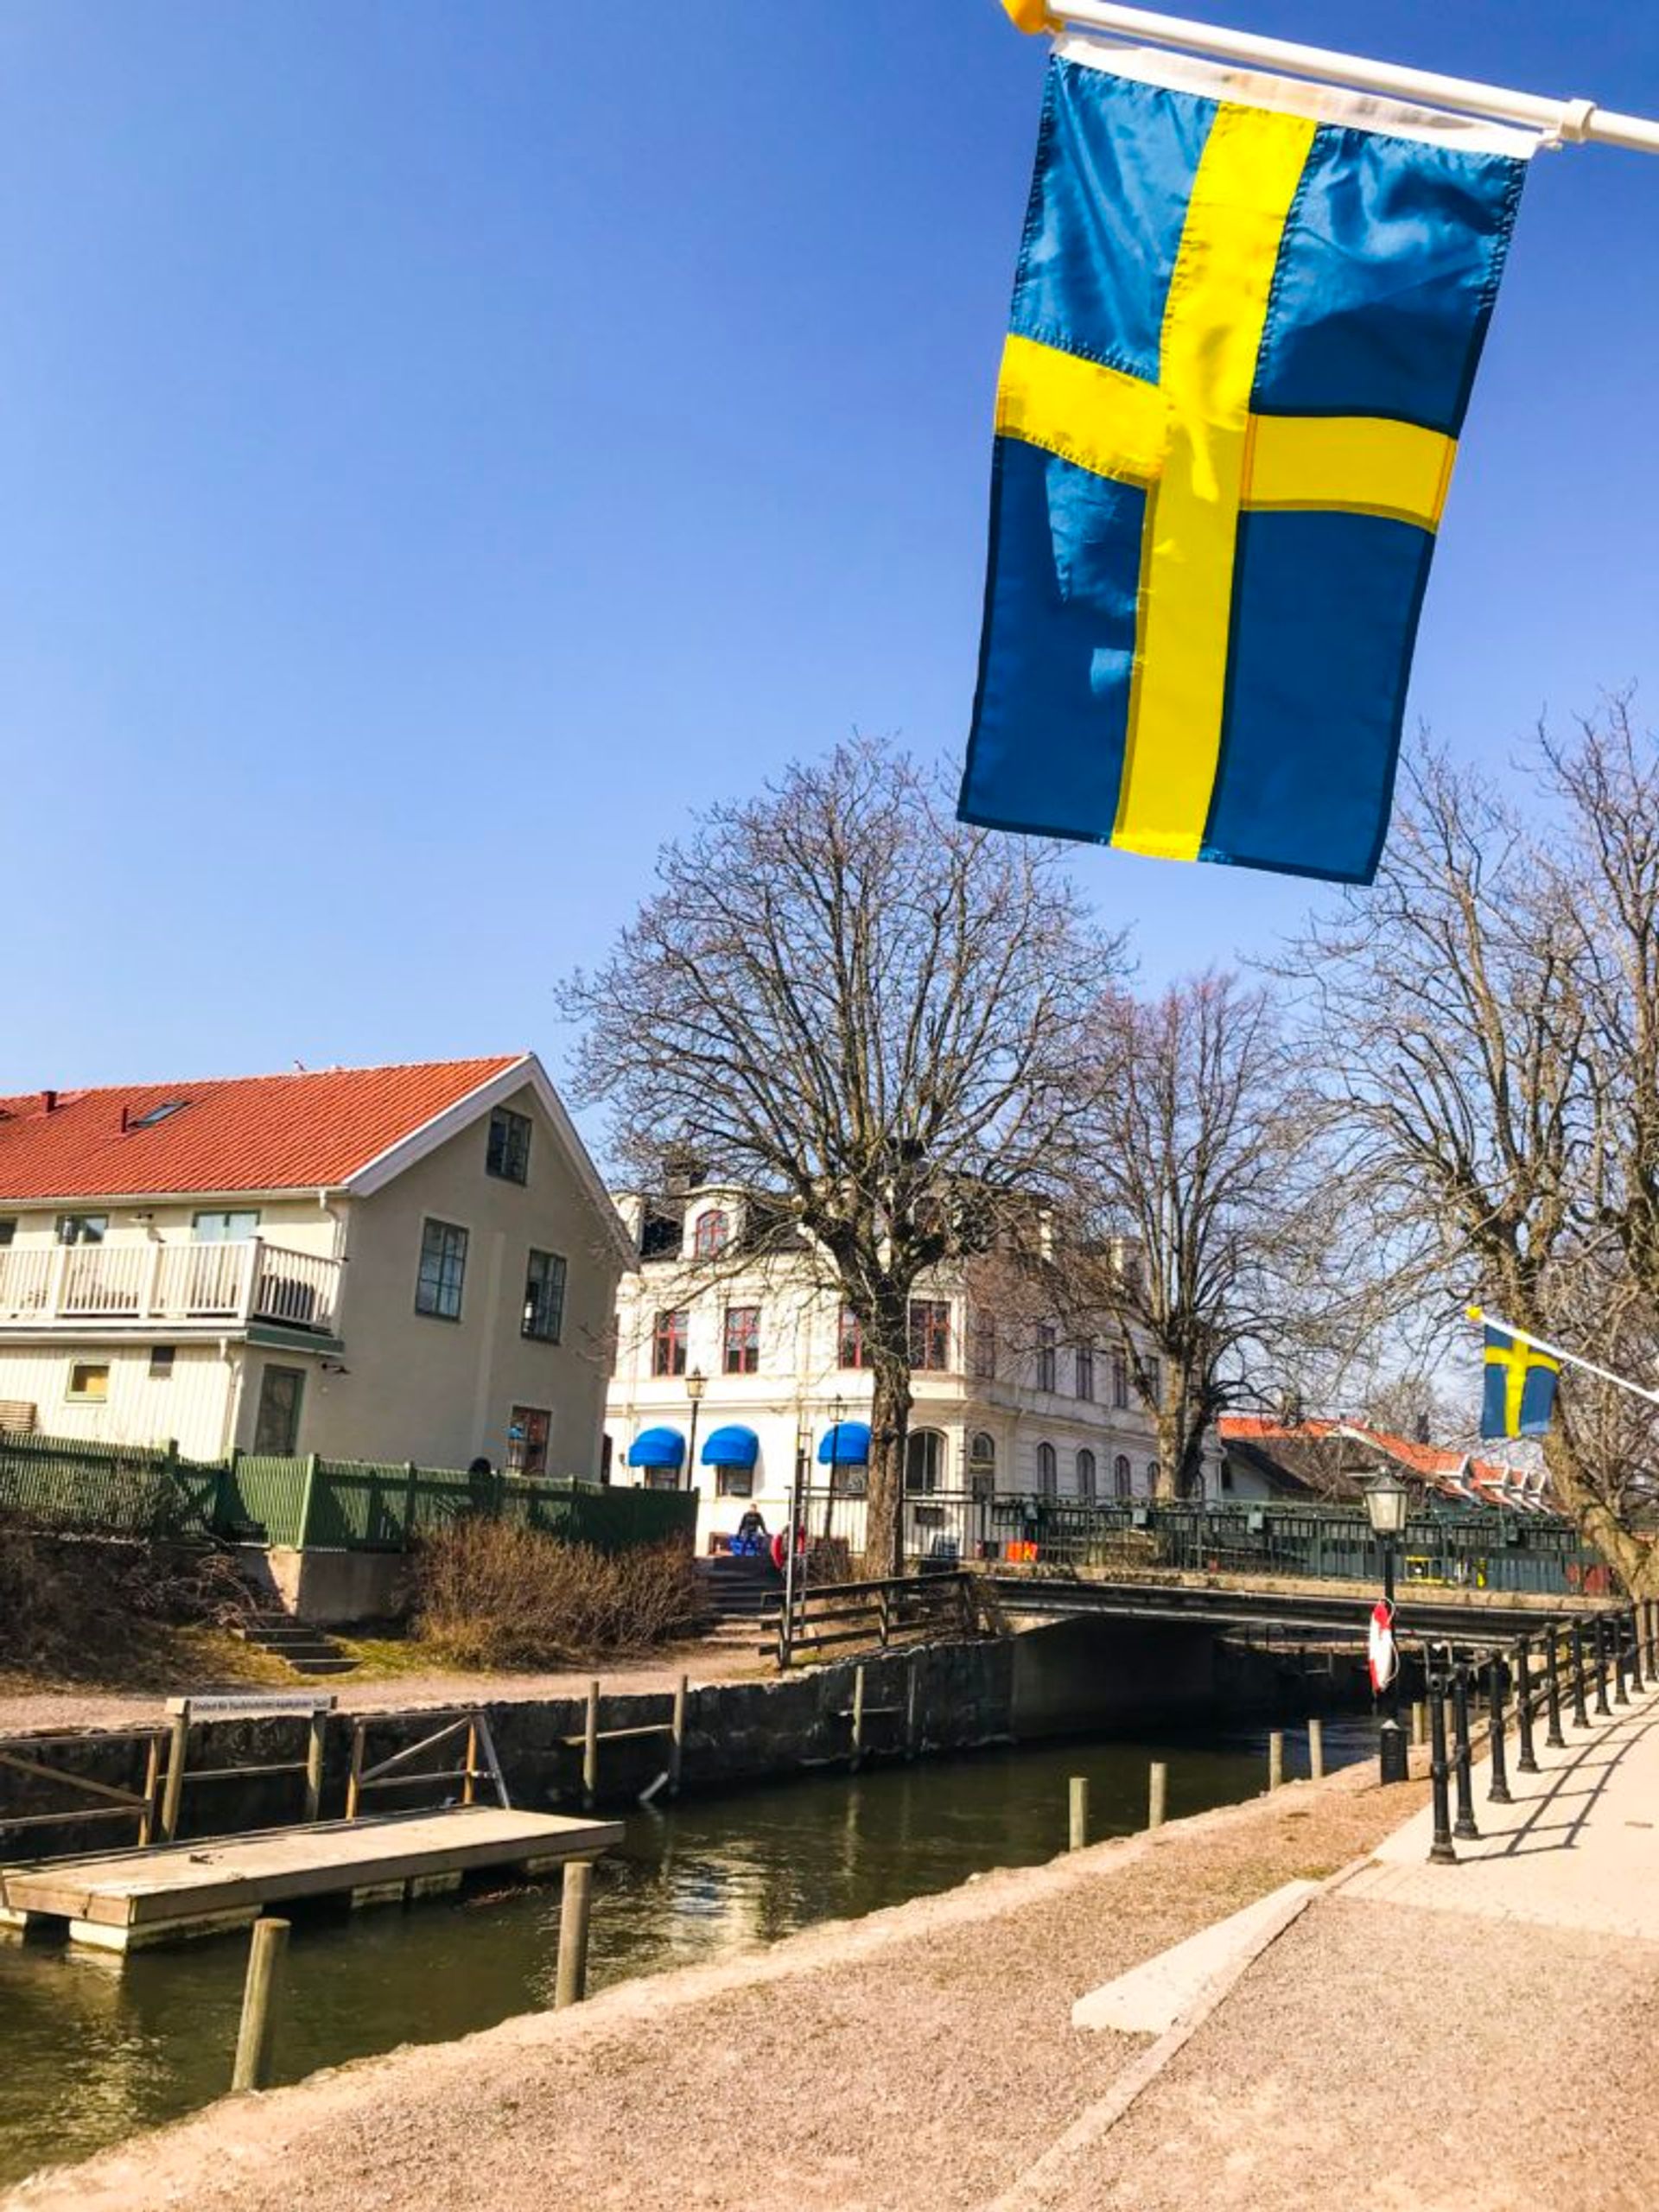 Swedish flags along a street.